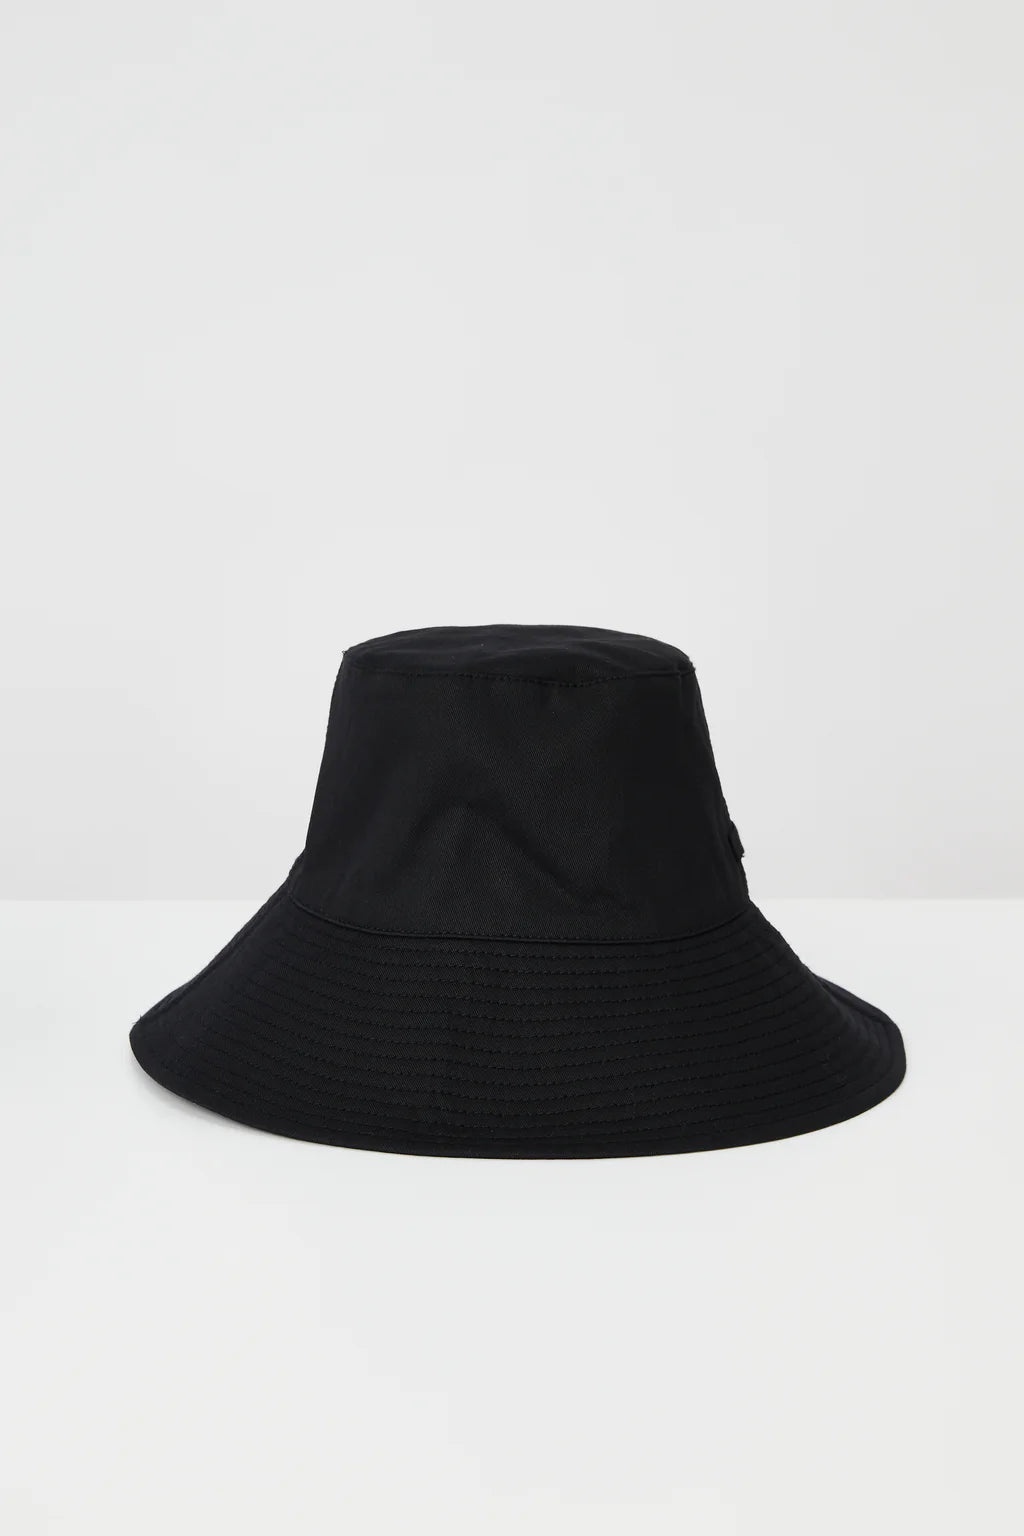 Lee Mathews Workroom Hat - Black